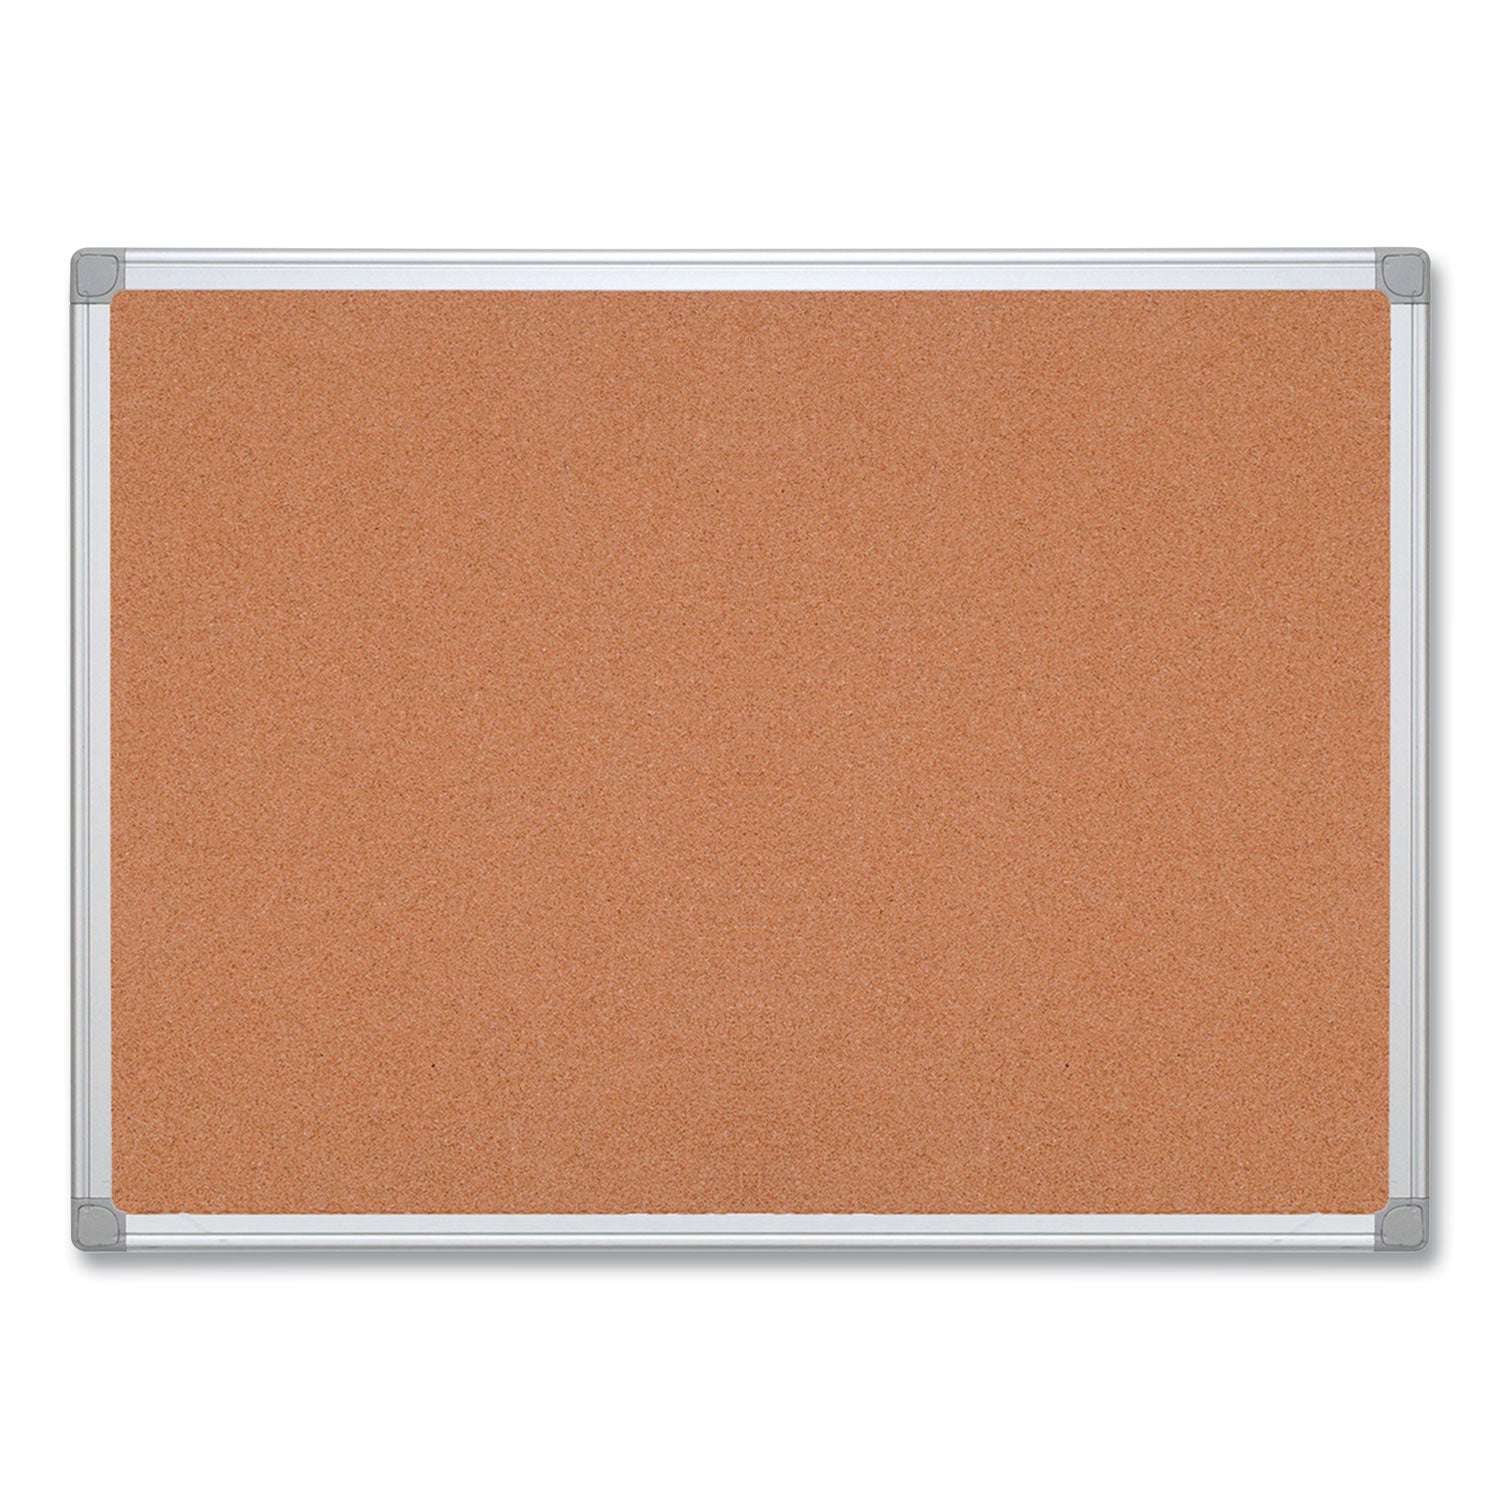 Earth Cork Board, 72 x 48, Tan Surface, Silver Aluminum Frame - 